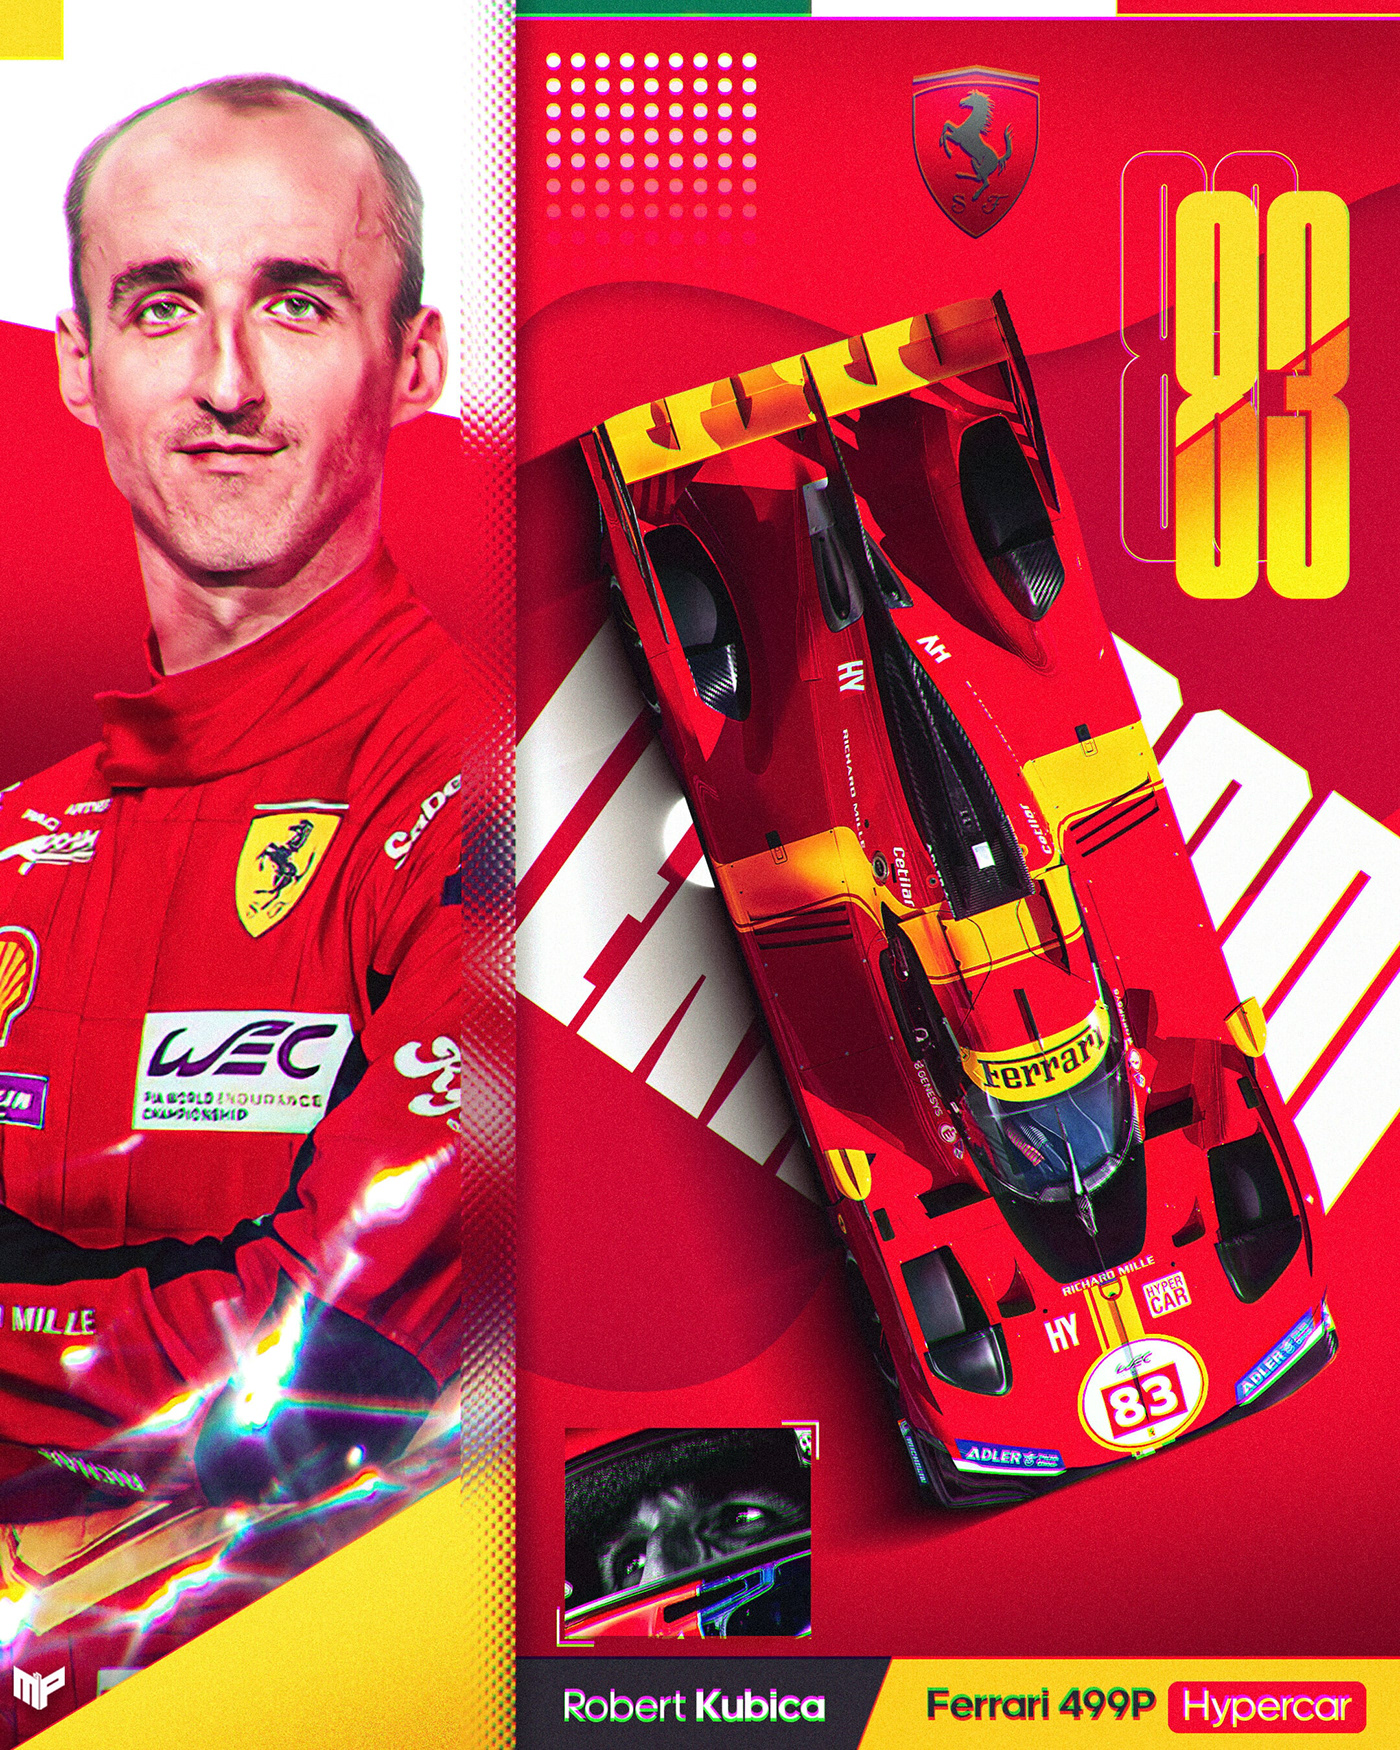 kubica robertkubica ferrari499p hypercar design Motorsport designer fanart poster photoshop